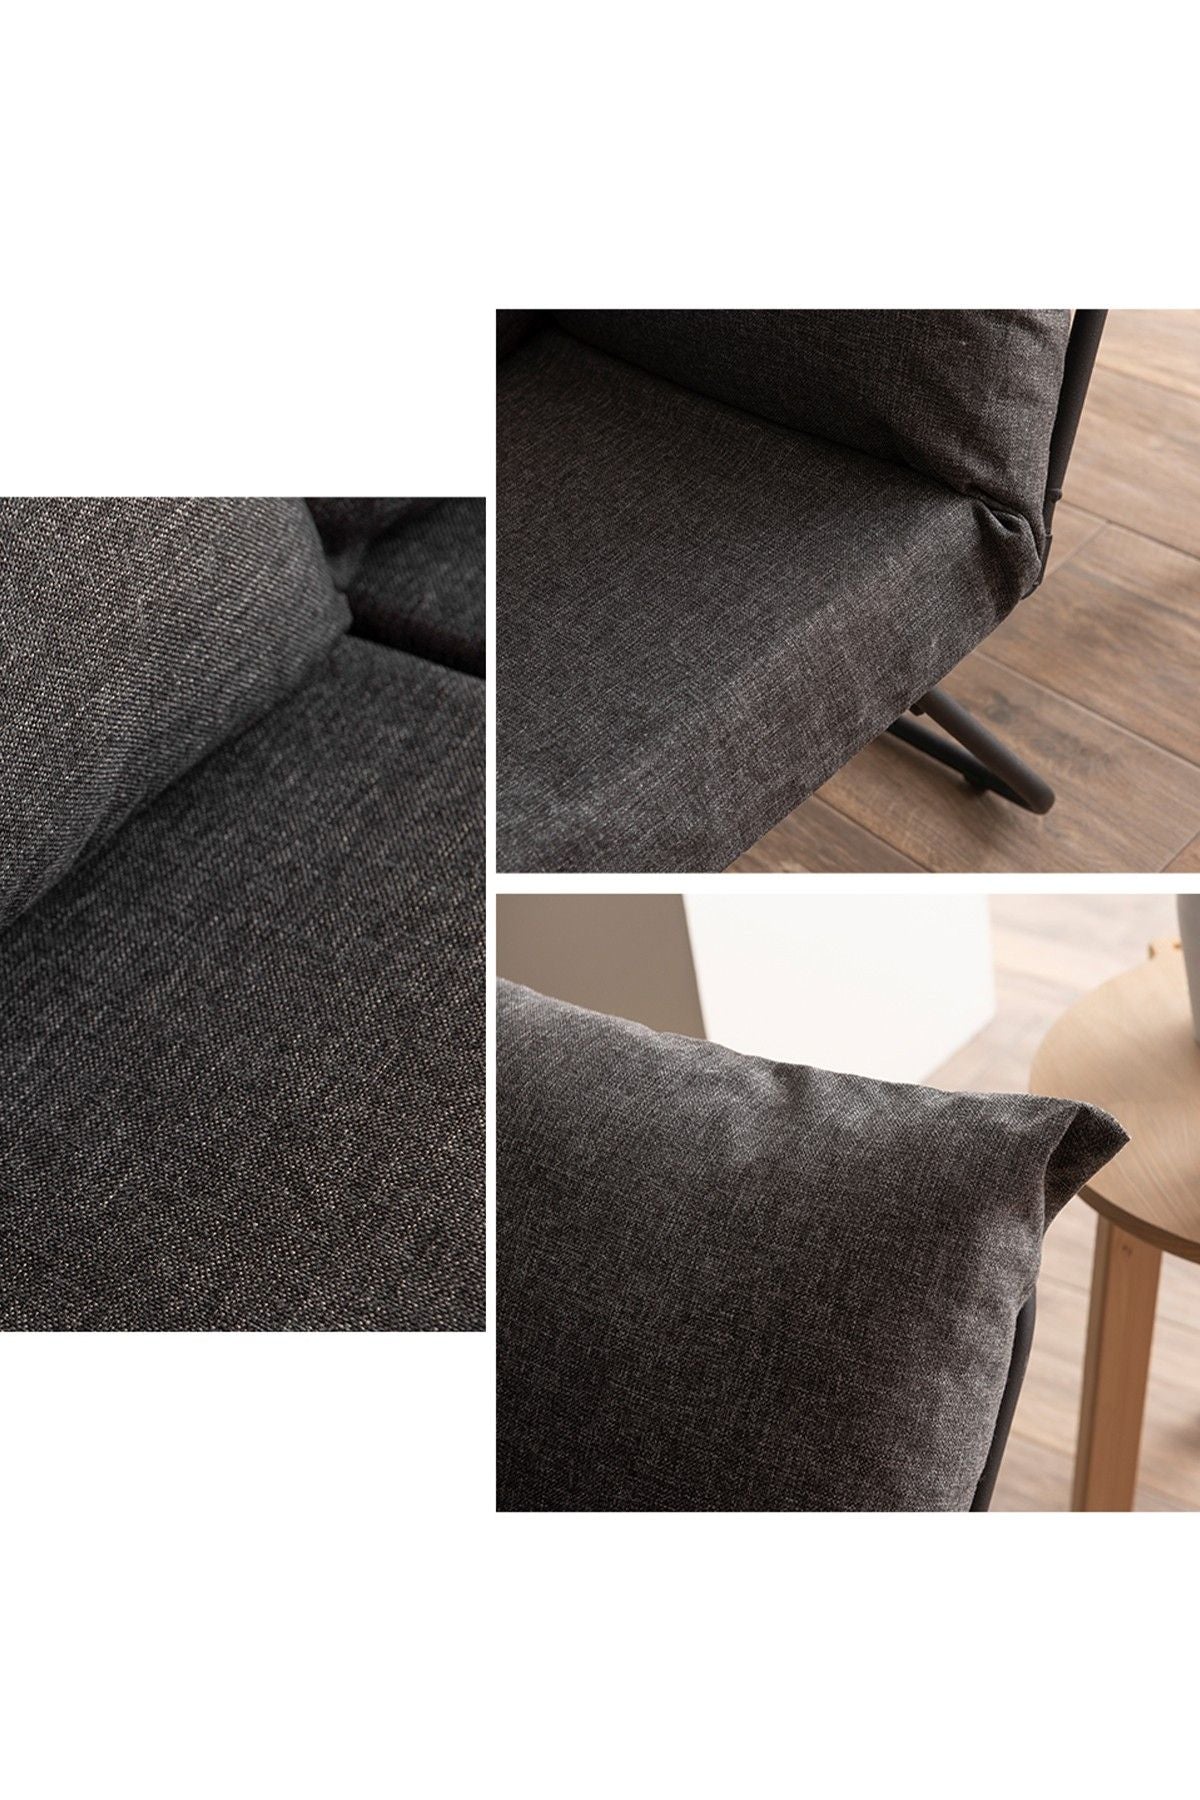 Viper 2-Seater - Dark Grey - 2-Seat Sofa-Bed